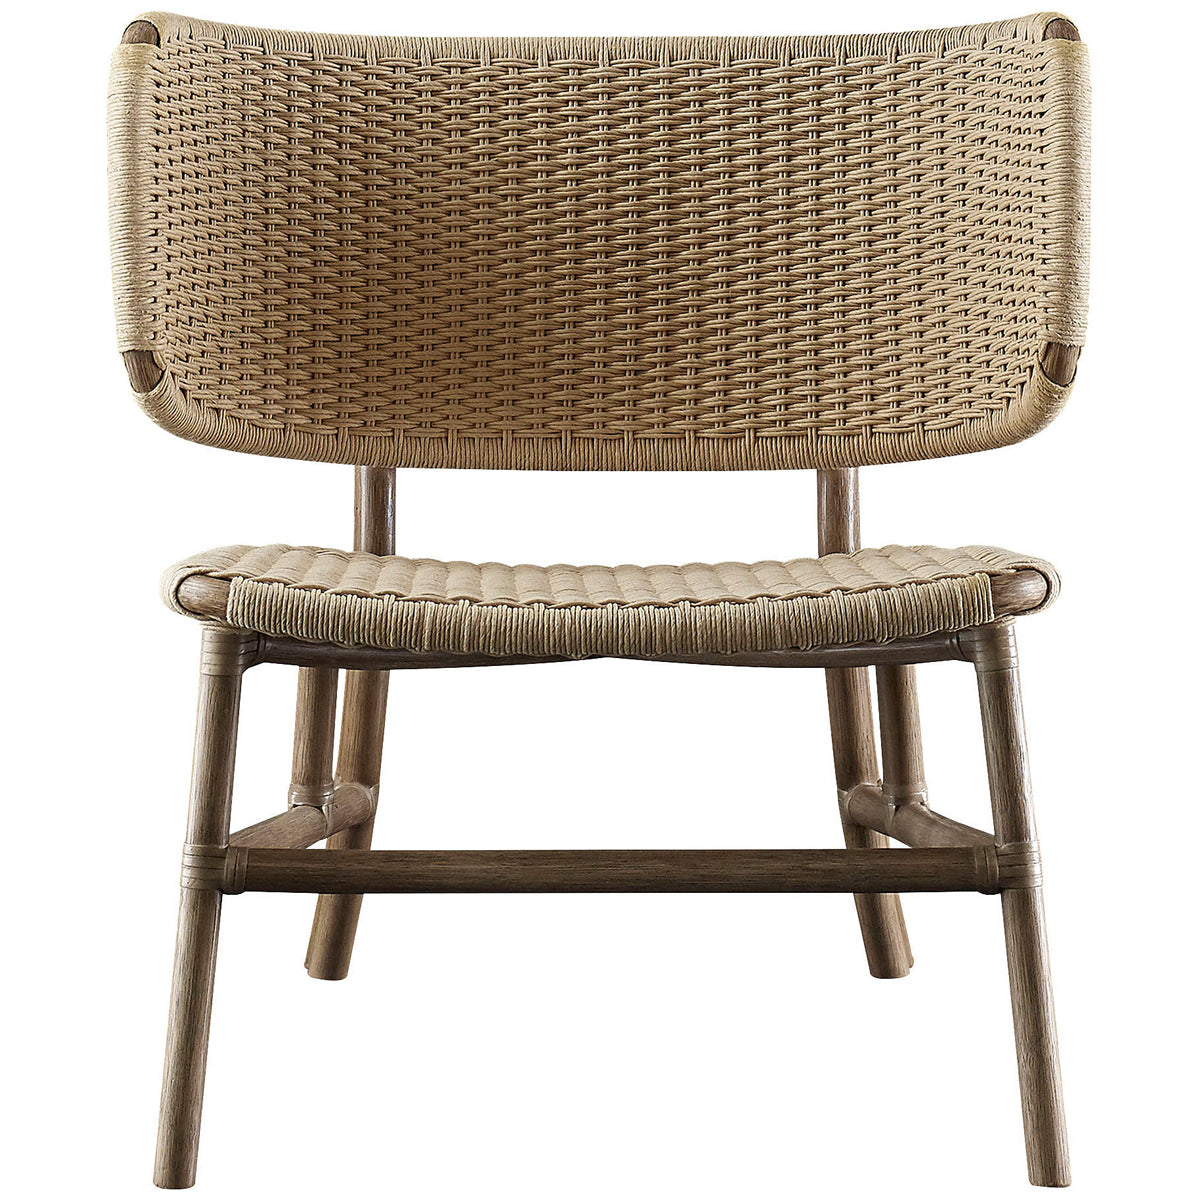 Baker Furniture Hanalei Lounge Chair MCU1007C